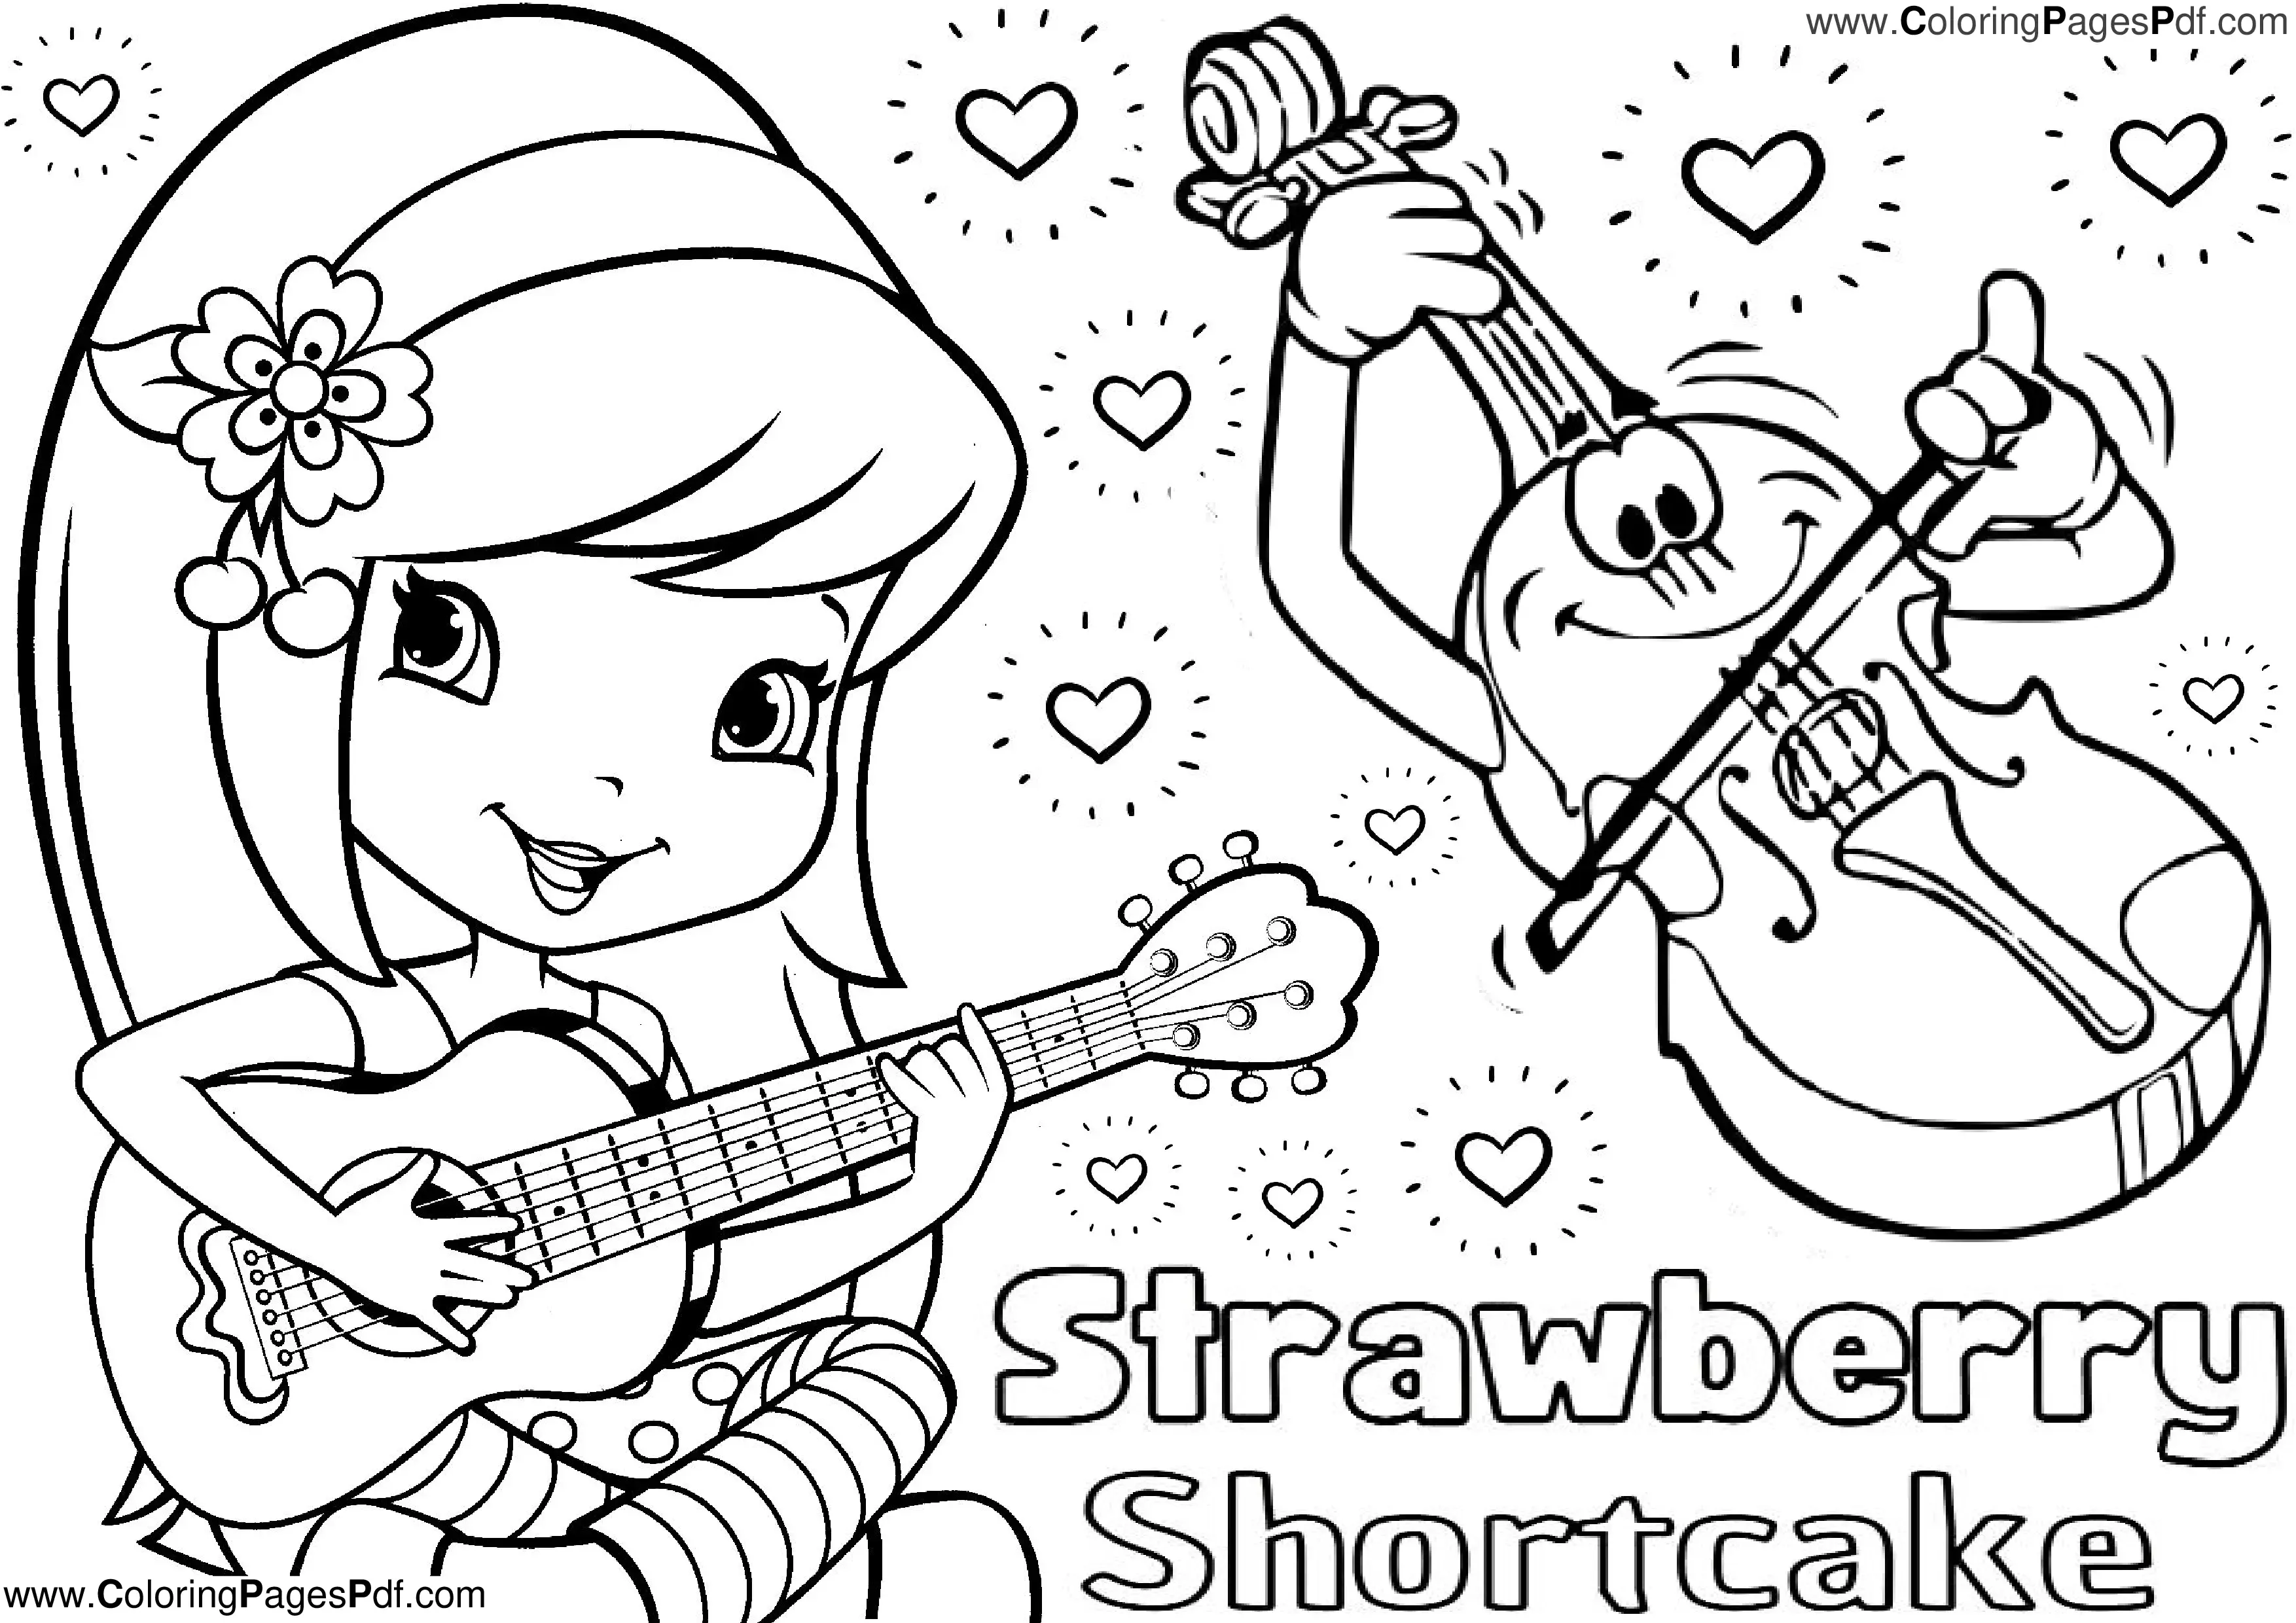 blue bunny strawberry shortcake,strawberry shortcake blue bunny,blue bunny strawberry shortcake ice cream,blue bunny ice cream strawberry shortcake,strawberry shortcake ice cream blue bunny,blue bunny strawberry shortcake mini swirls,new strawberry shortcake,strawberry shortcake drumstick,strawberry shortcake rolls,shortcake rolls